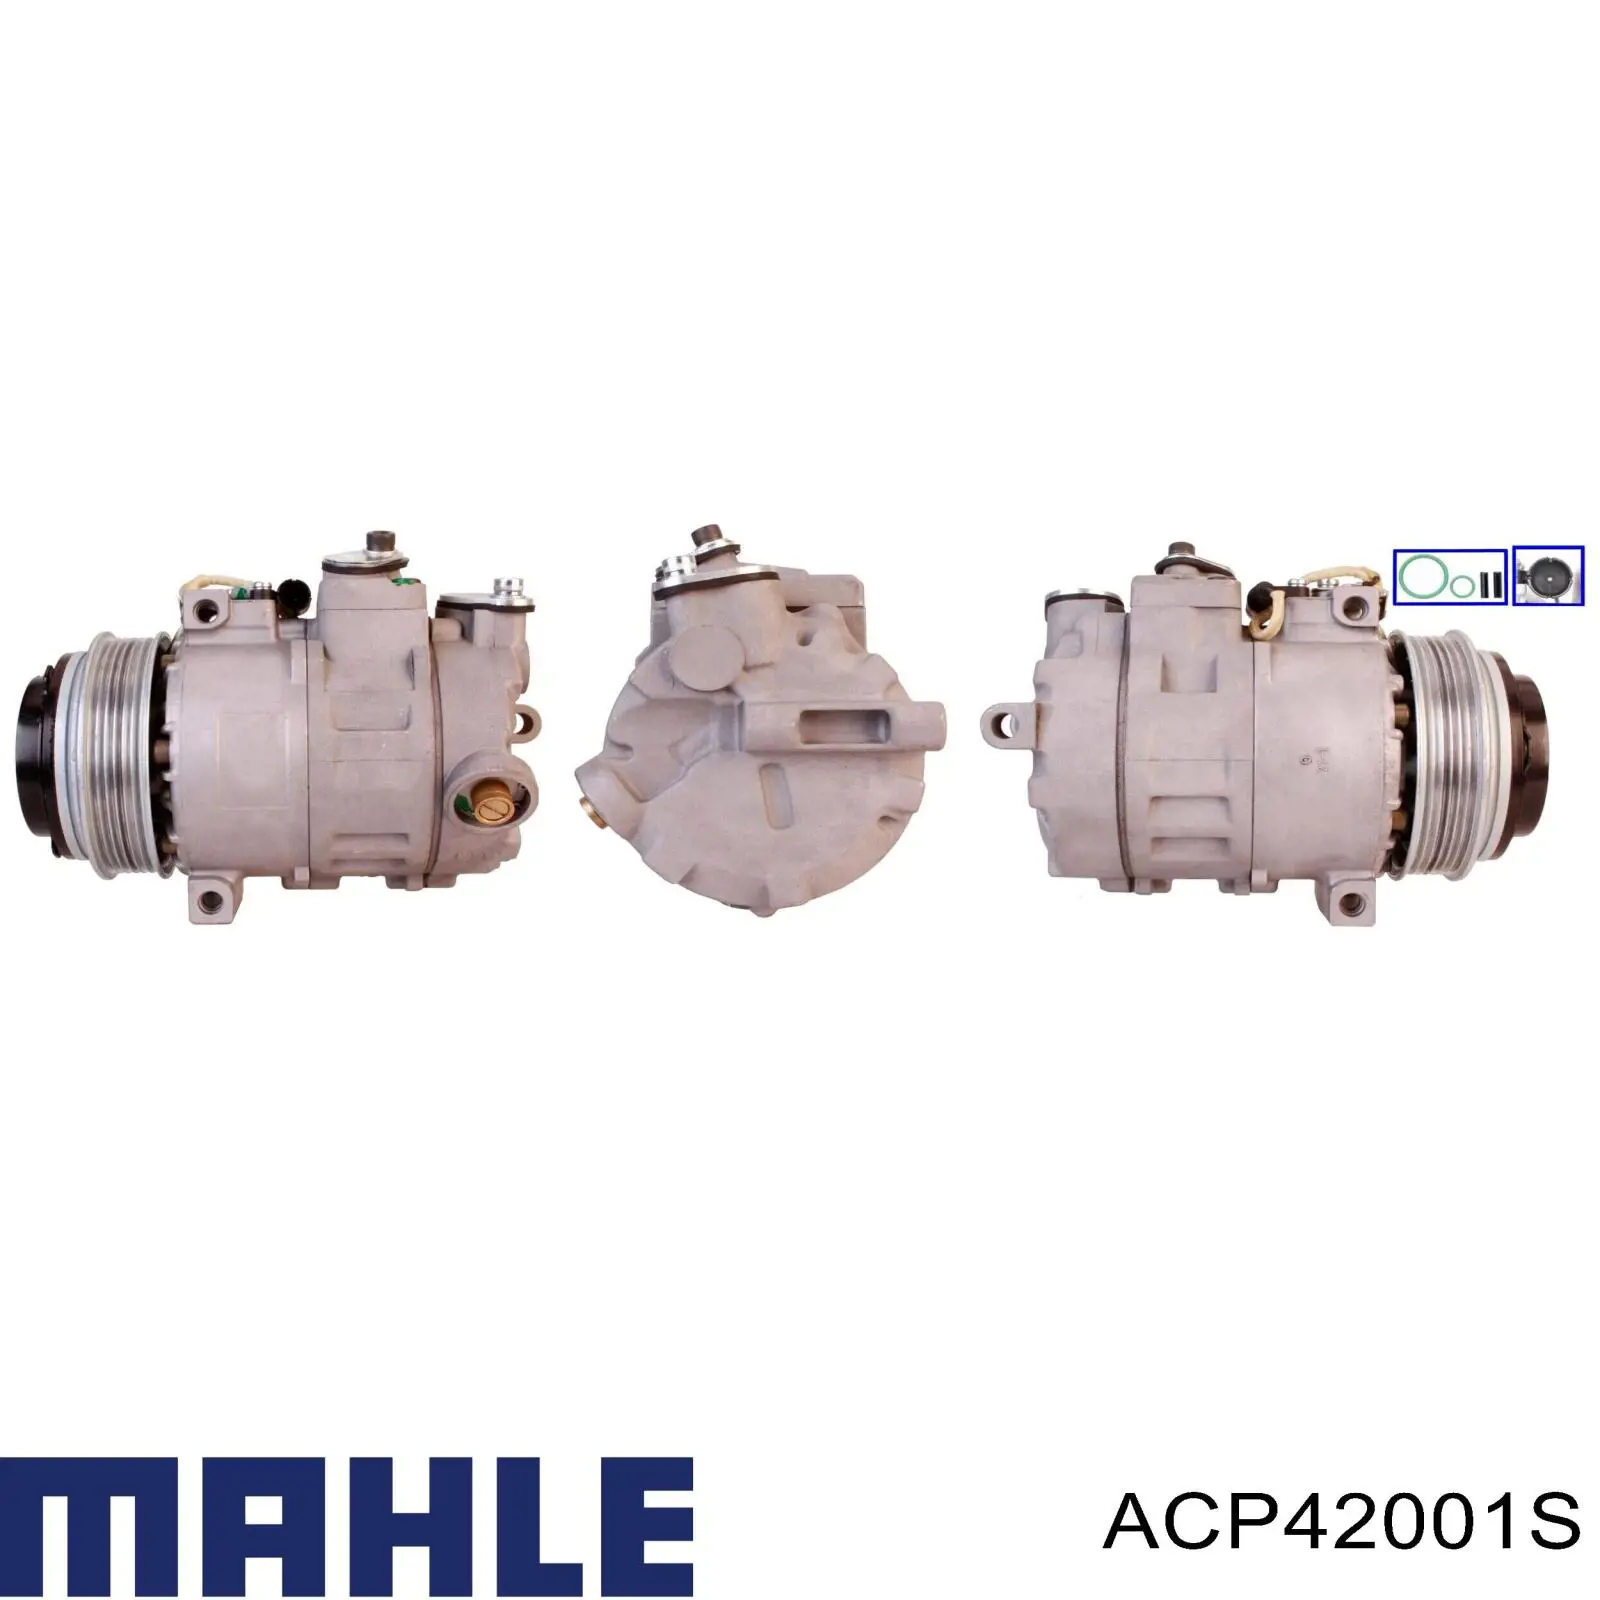 ACP 42 001S Mahle Original compresor de aire acondicionado